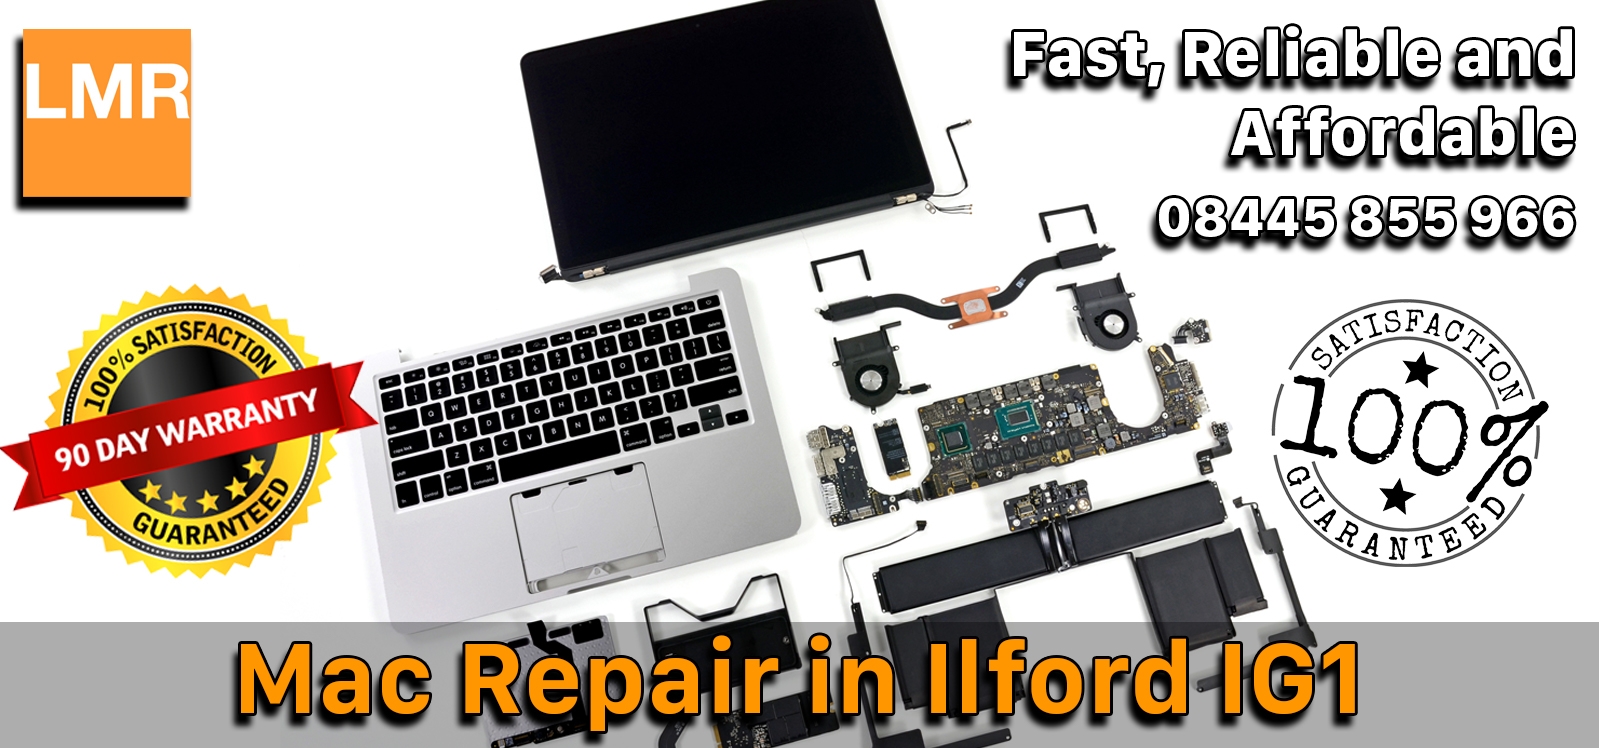 apple-mac-repair-ilford-ig1